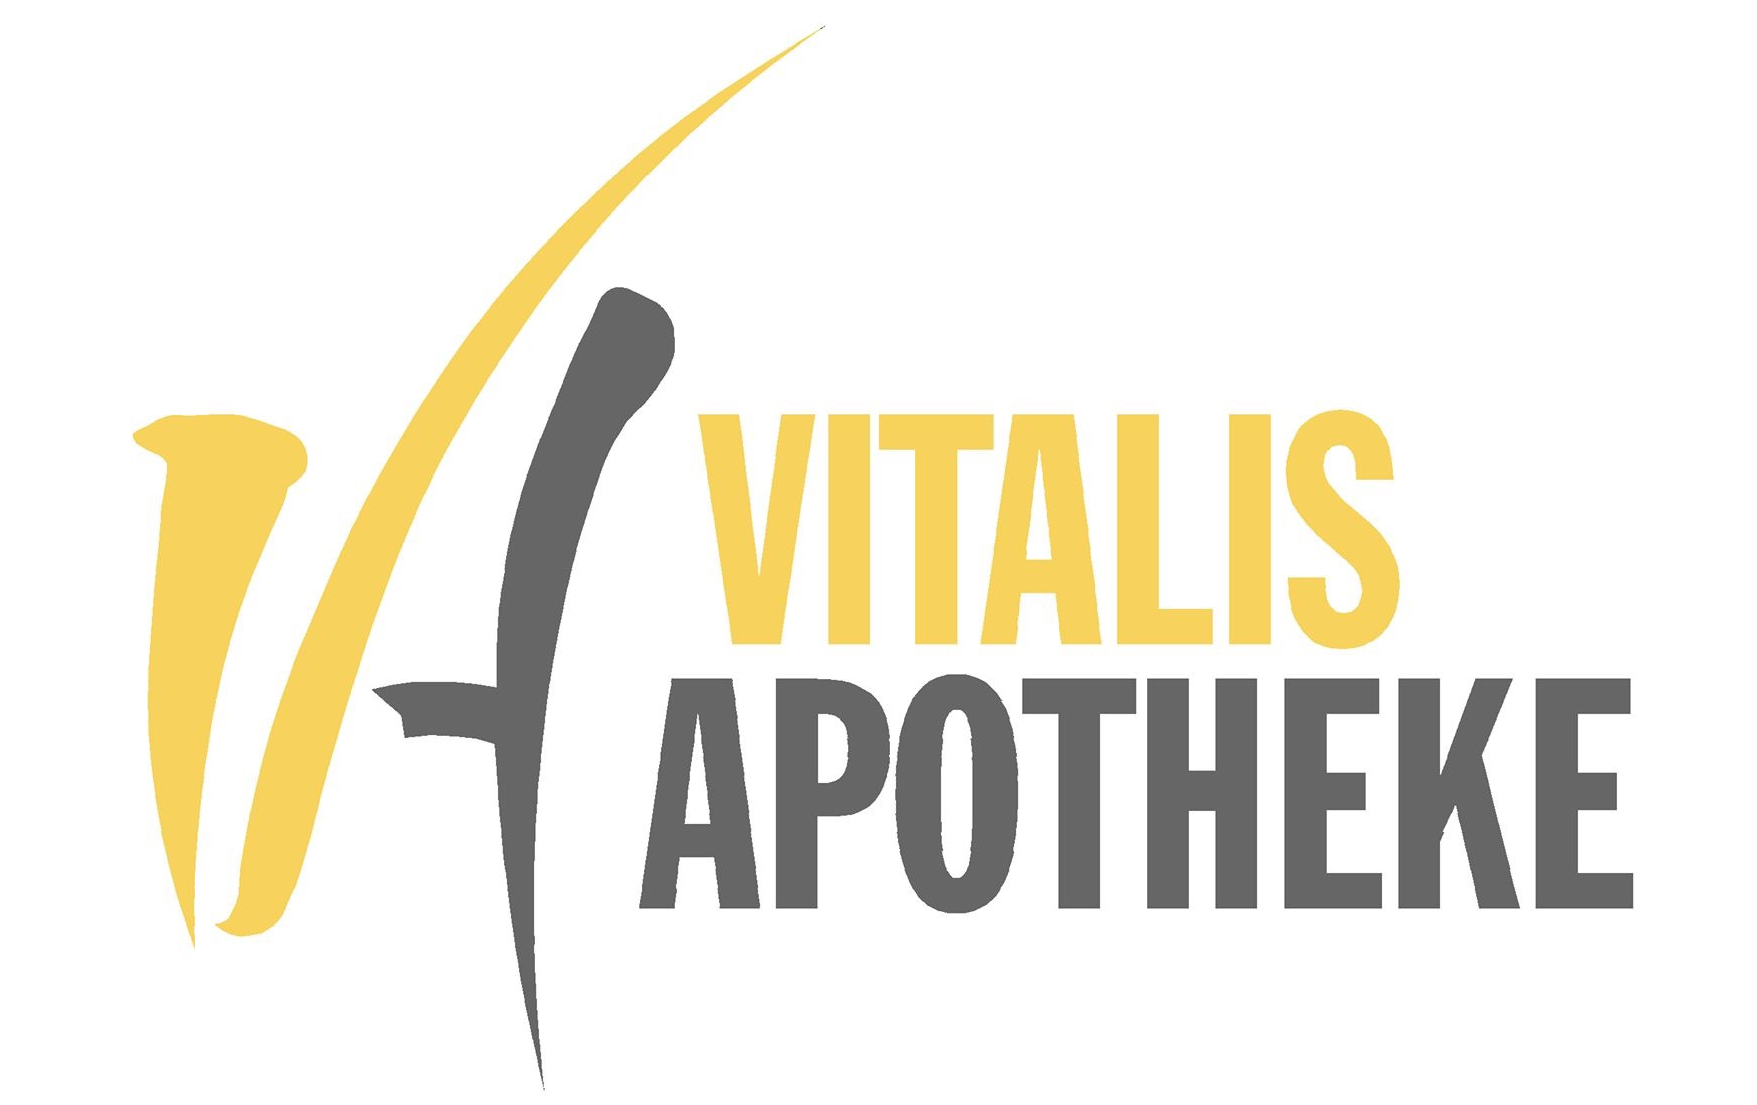 Vitalis-Apotheke